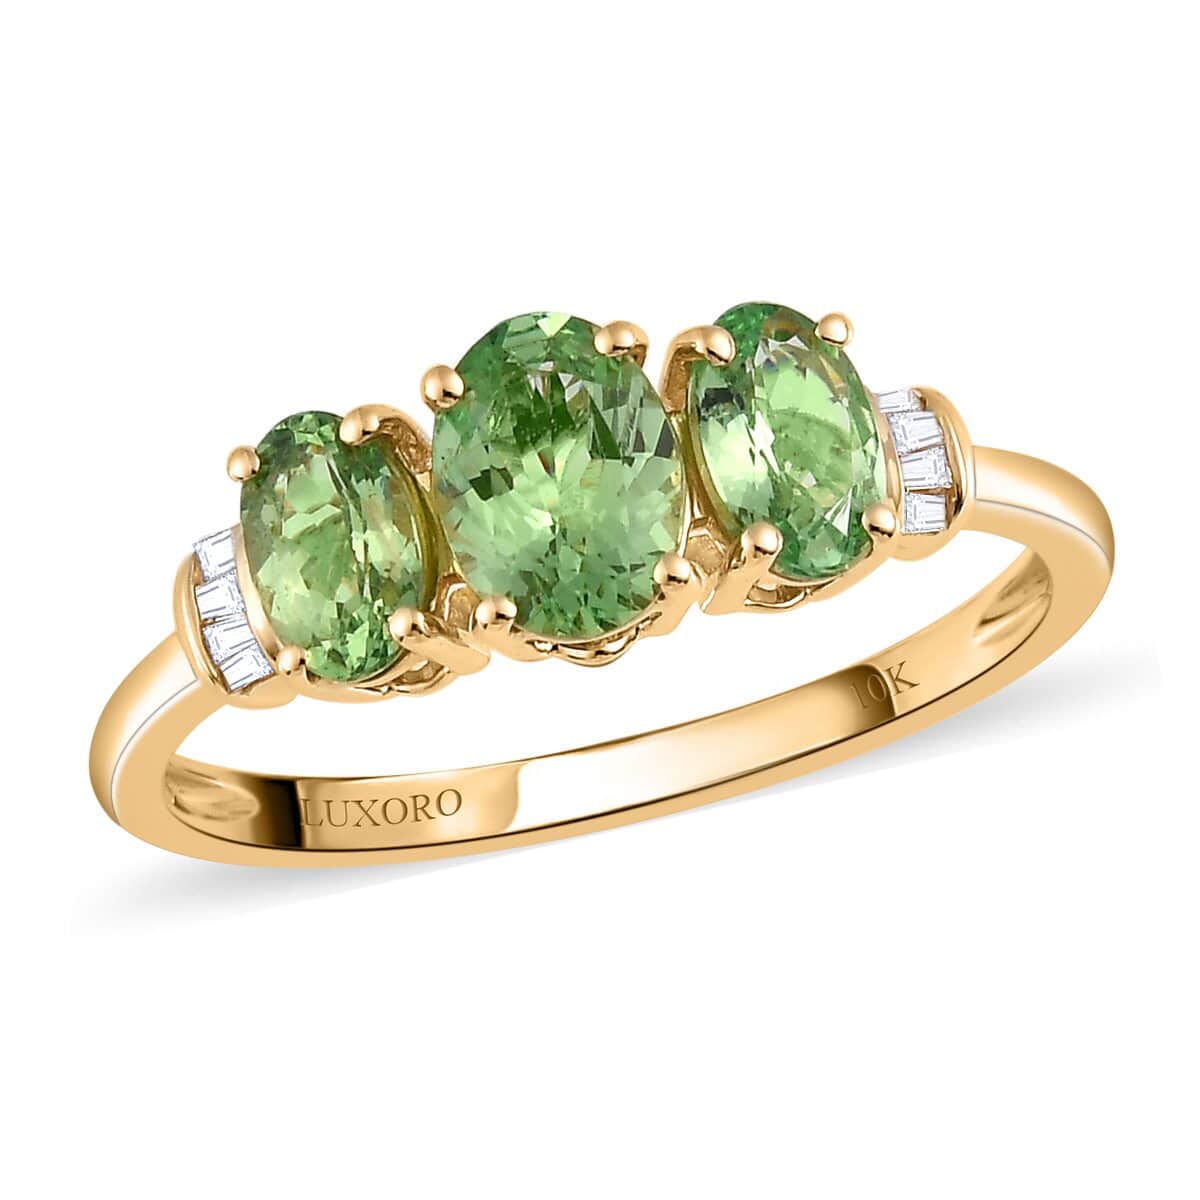 Luxoro 10K Yellow Gold Premium Natural Tsavorite Garnet and G-H I3 Diamond Trilogy Ring (Size 10.0) 2.10 Grams 1.75 ctw image number 0